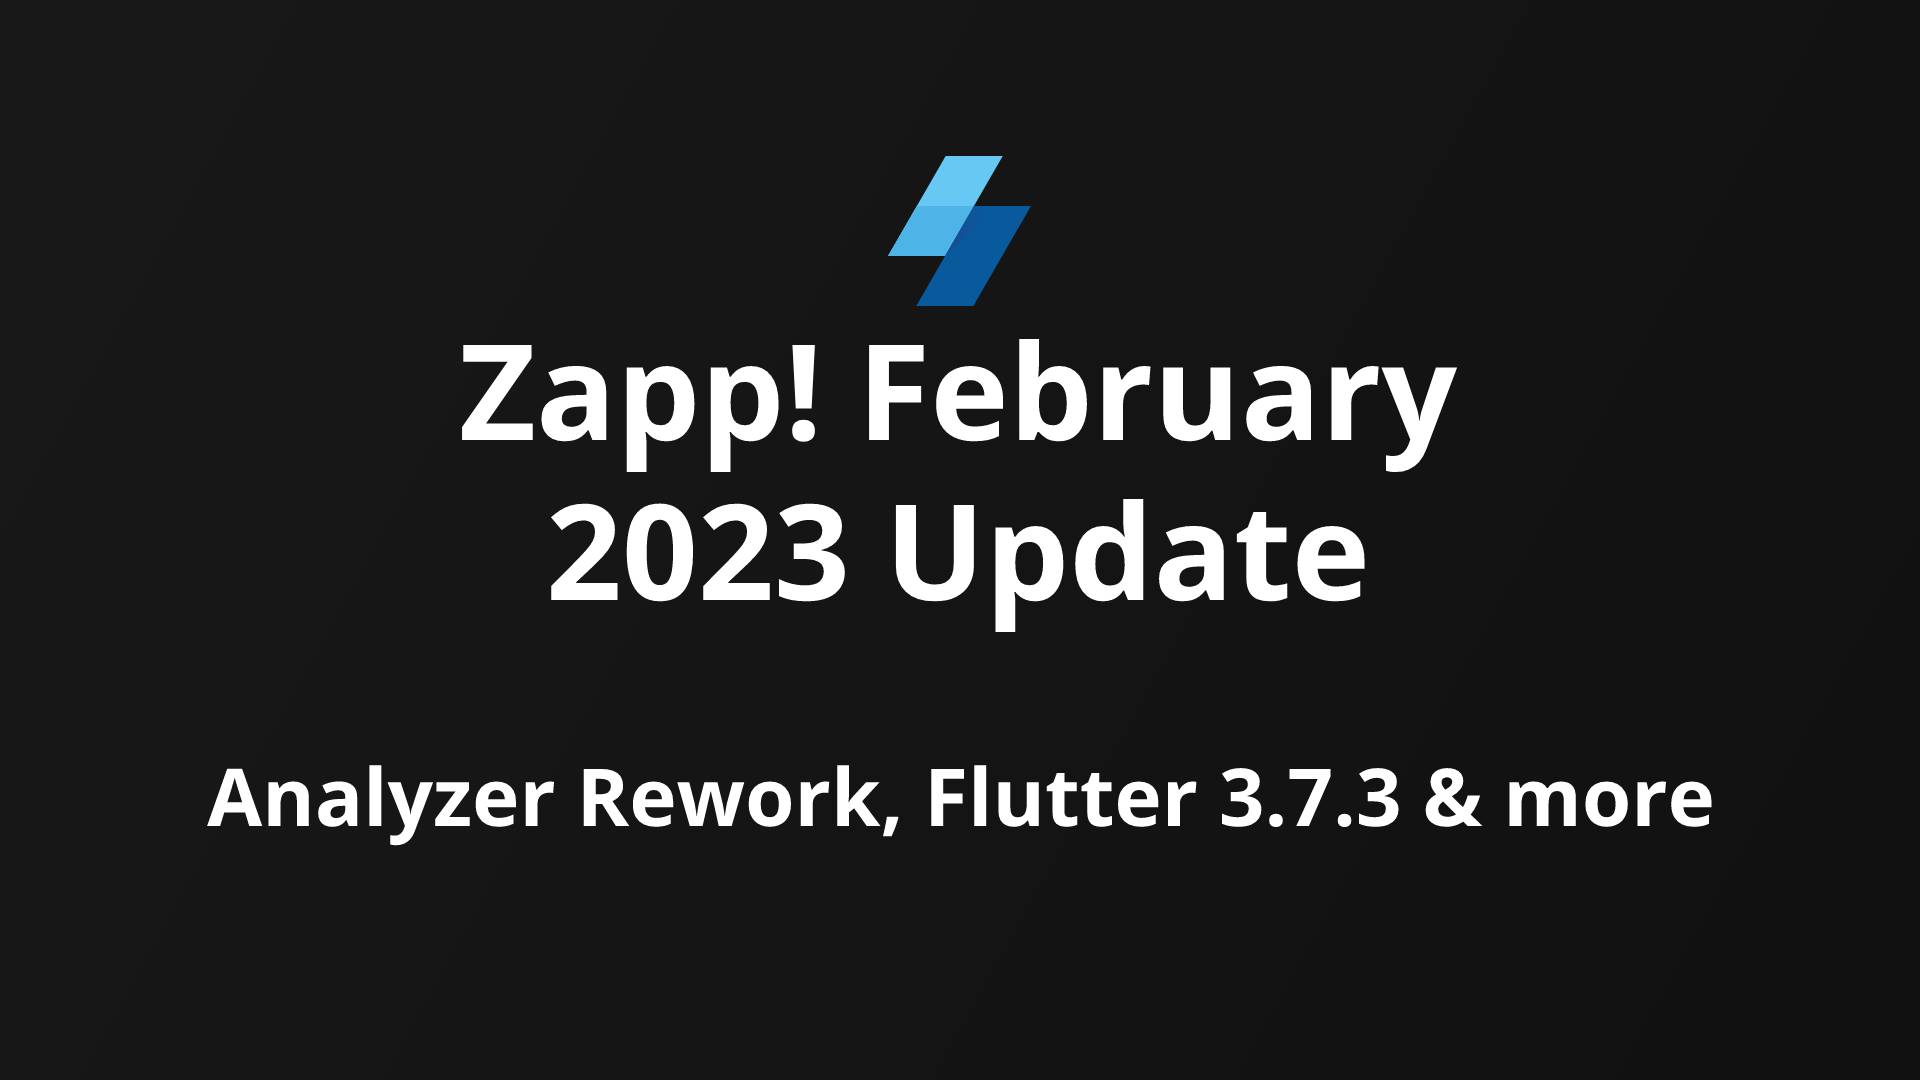 February 2023 Update